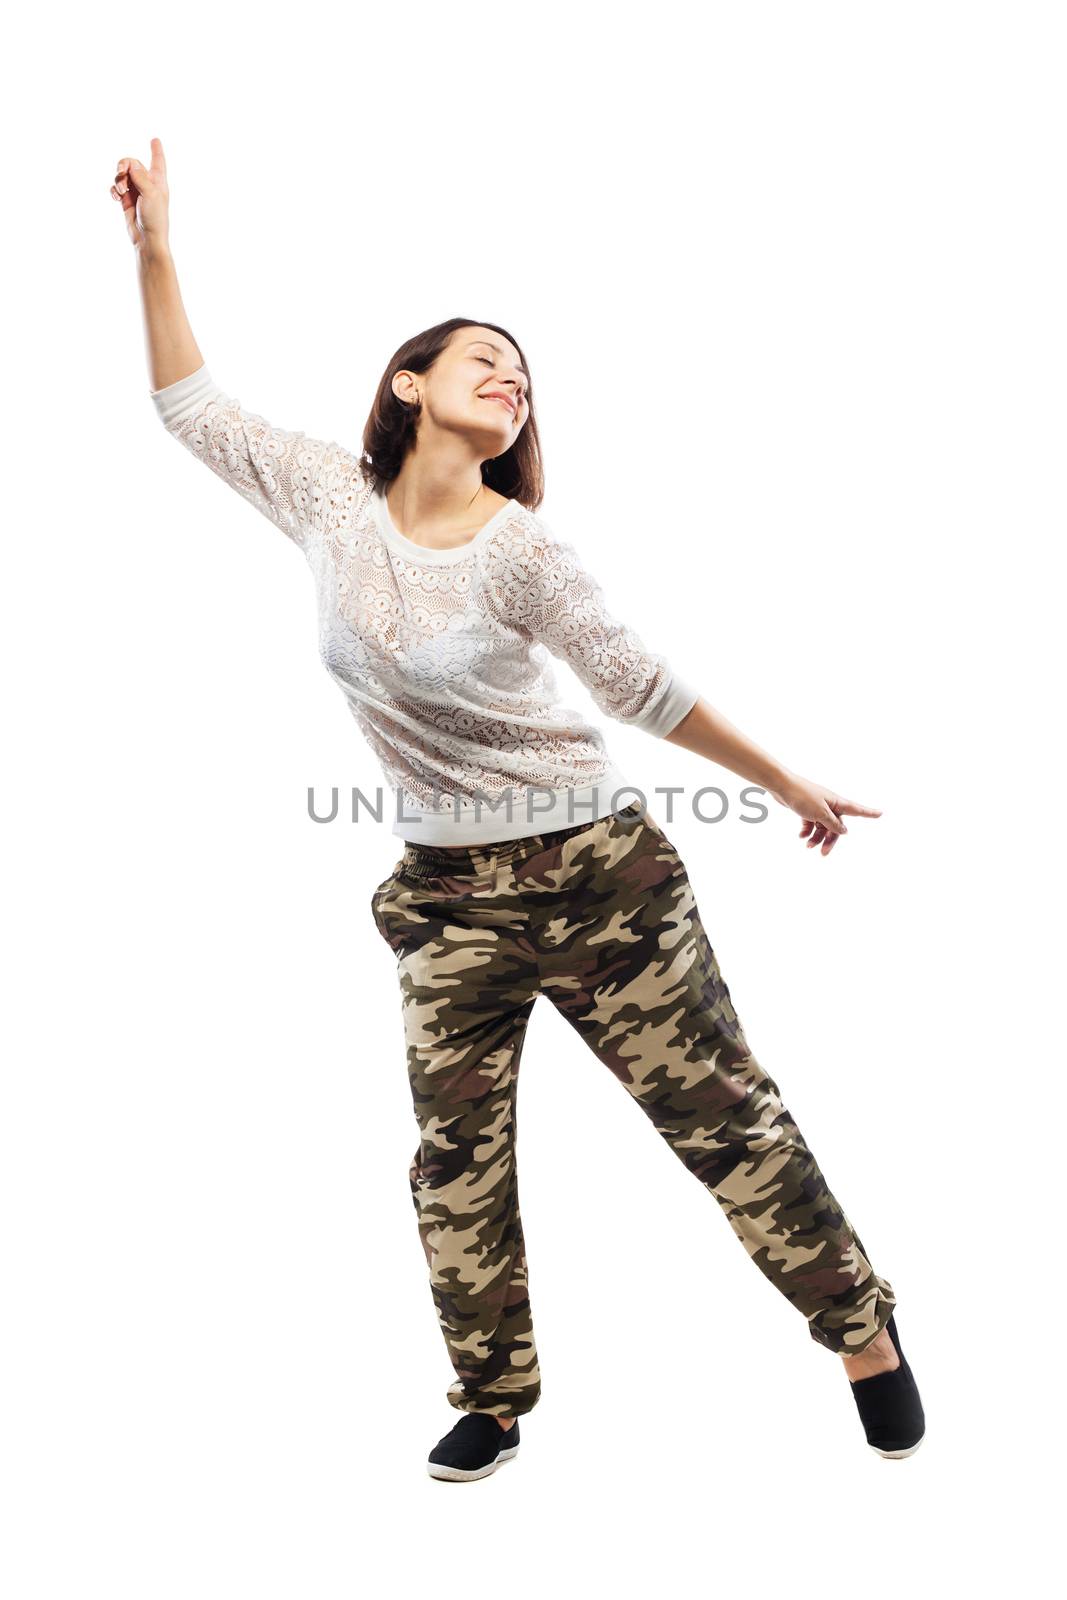 dancing girl in camouflage pants by kokimk